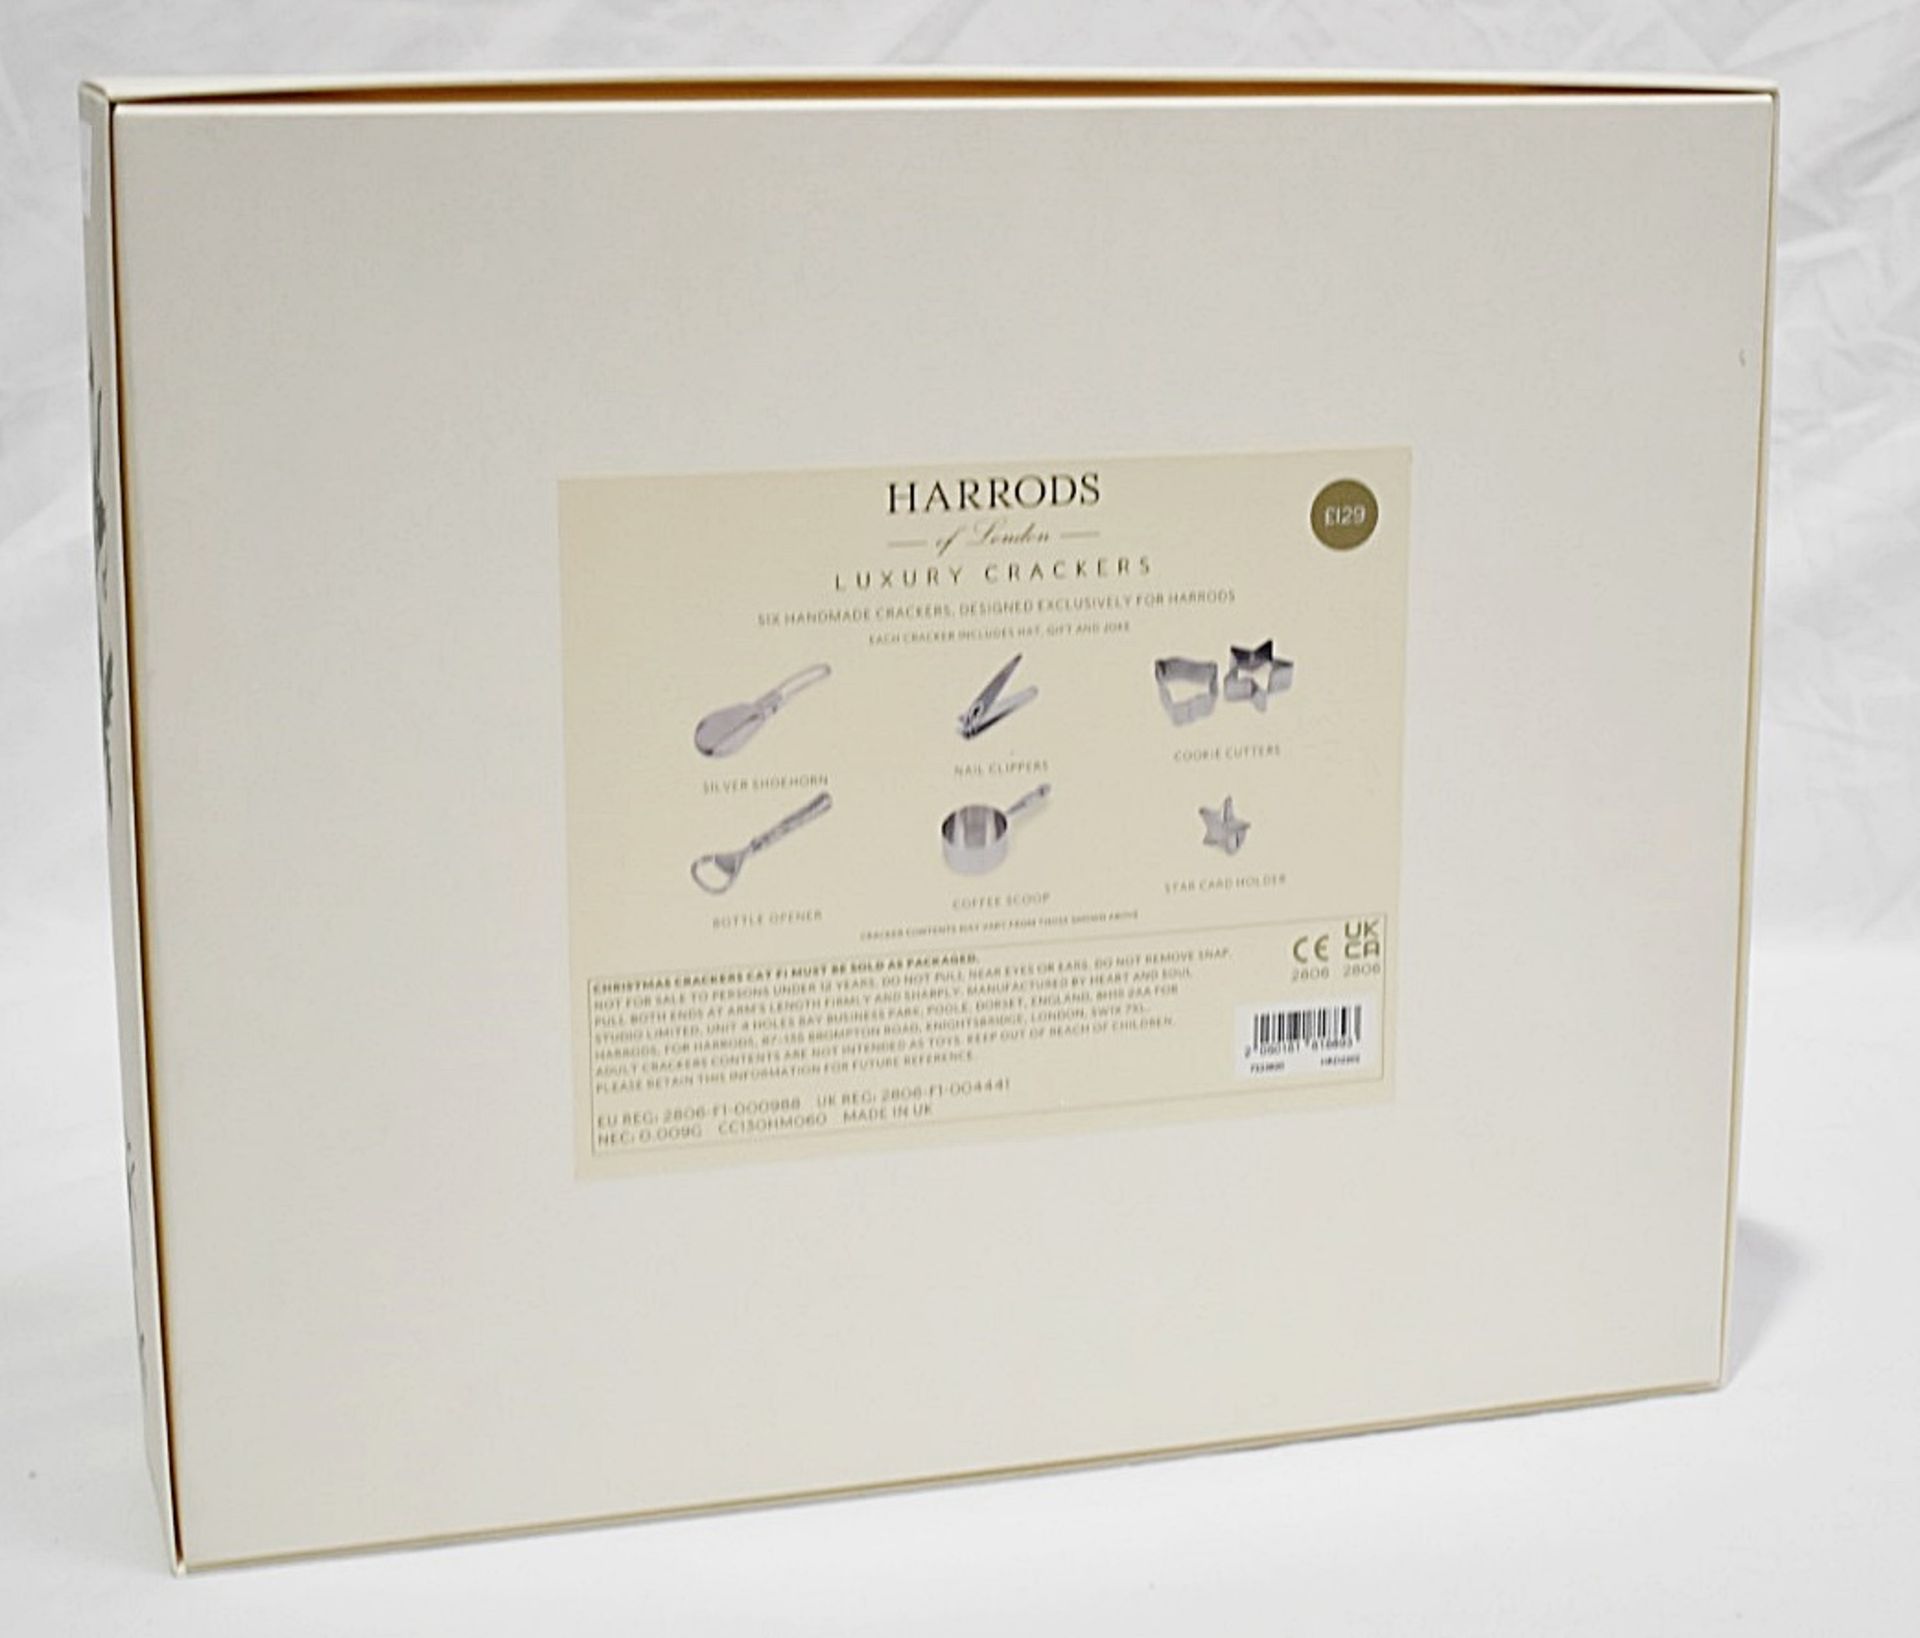 6 x HARRODS OF LONDON 'Regency Regalia' Luxury Handmade Christmas Crackers - Original Price £129.00 - Image 3 of 4